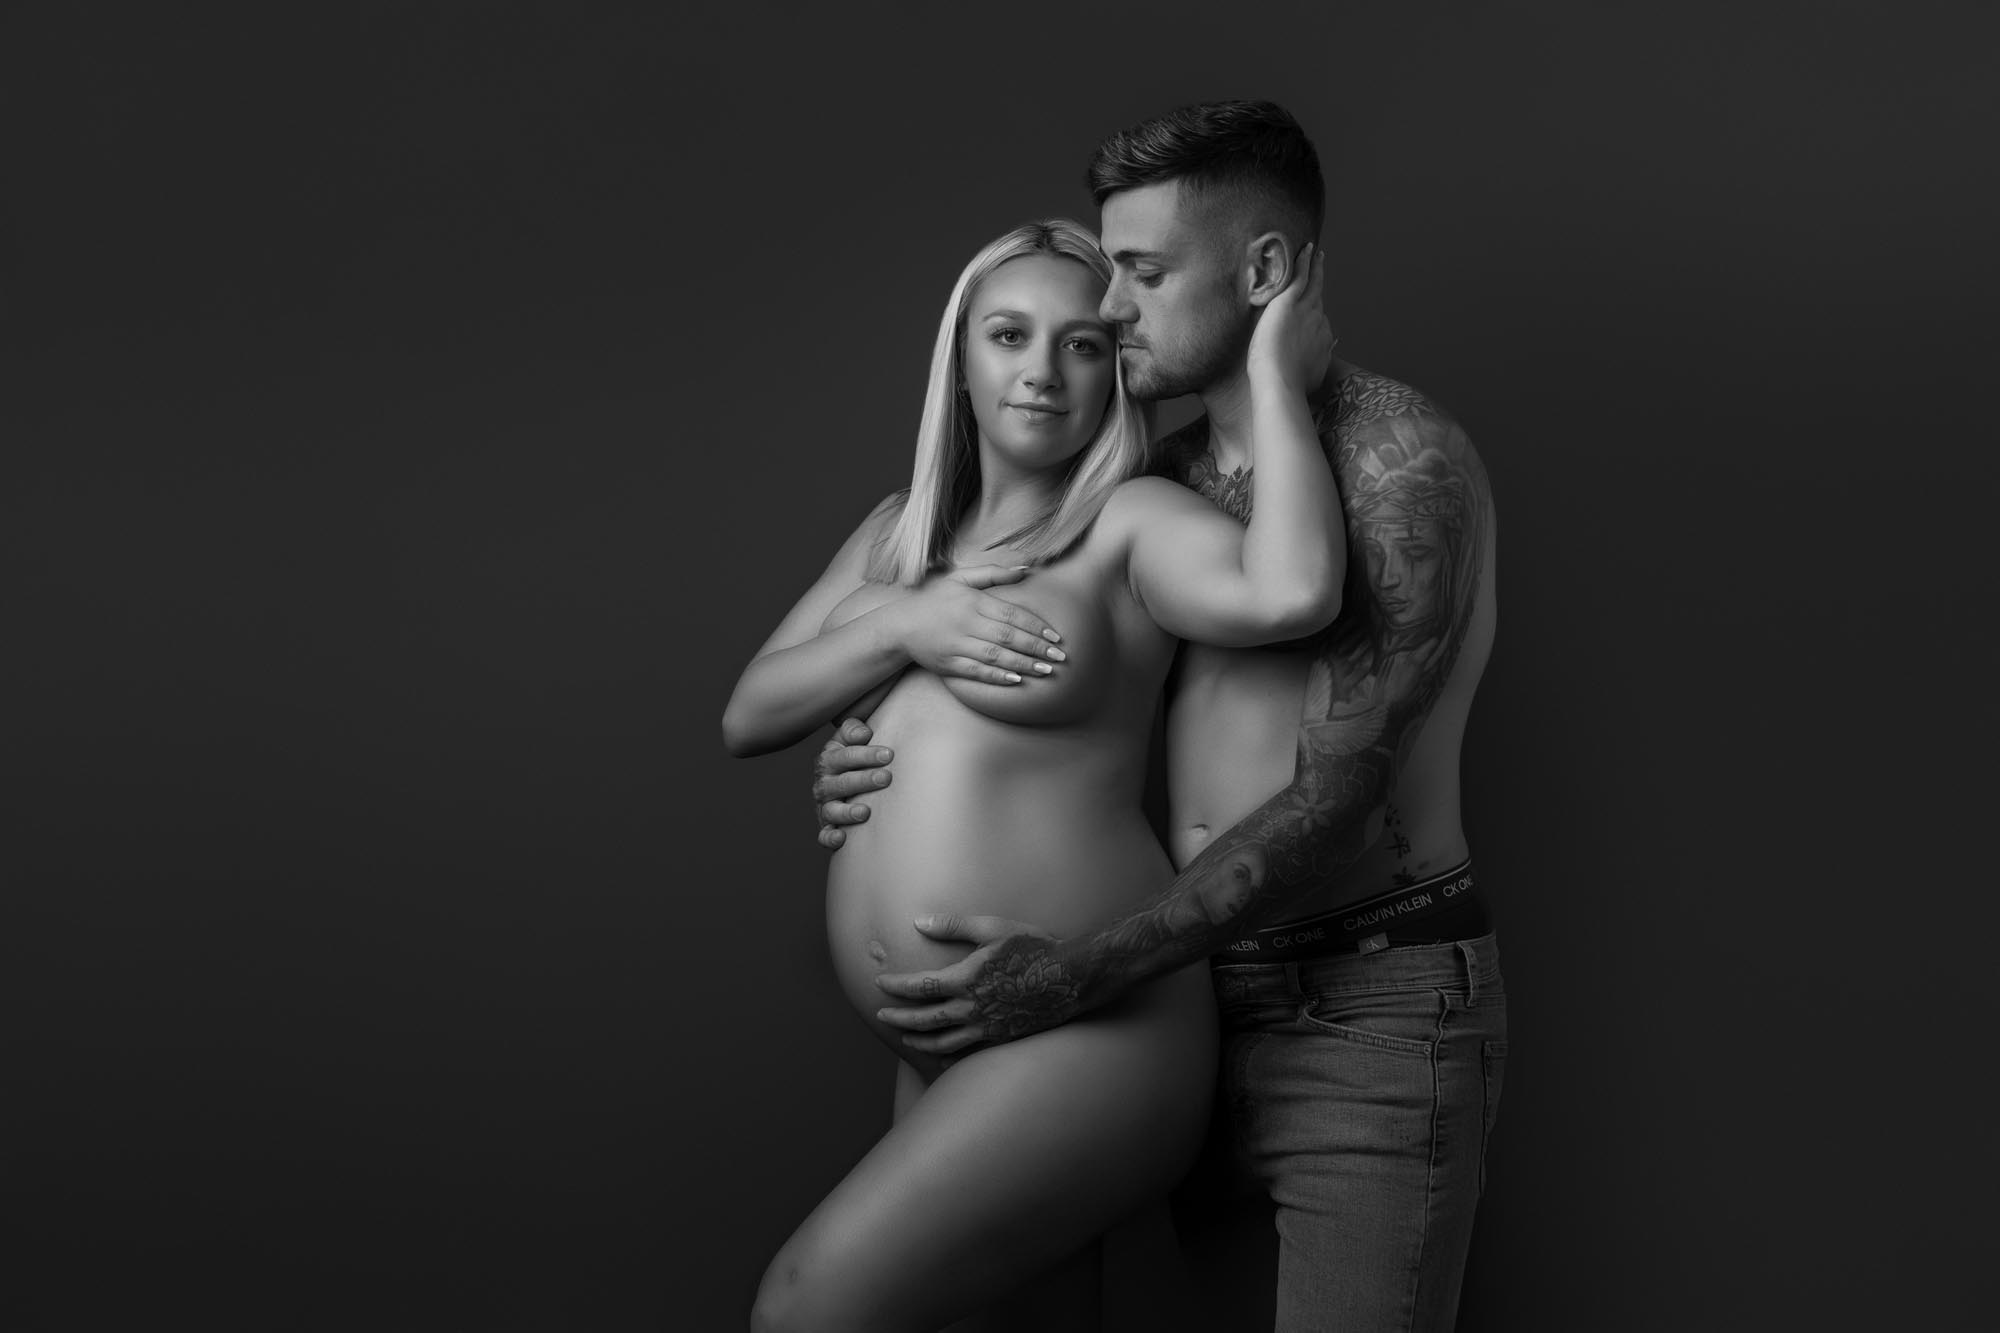 Maternity Photography Essex